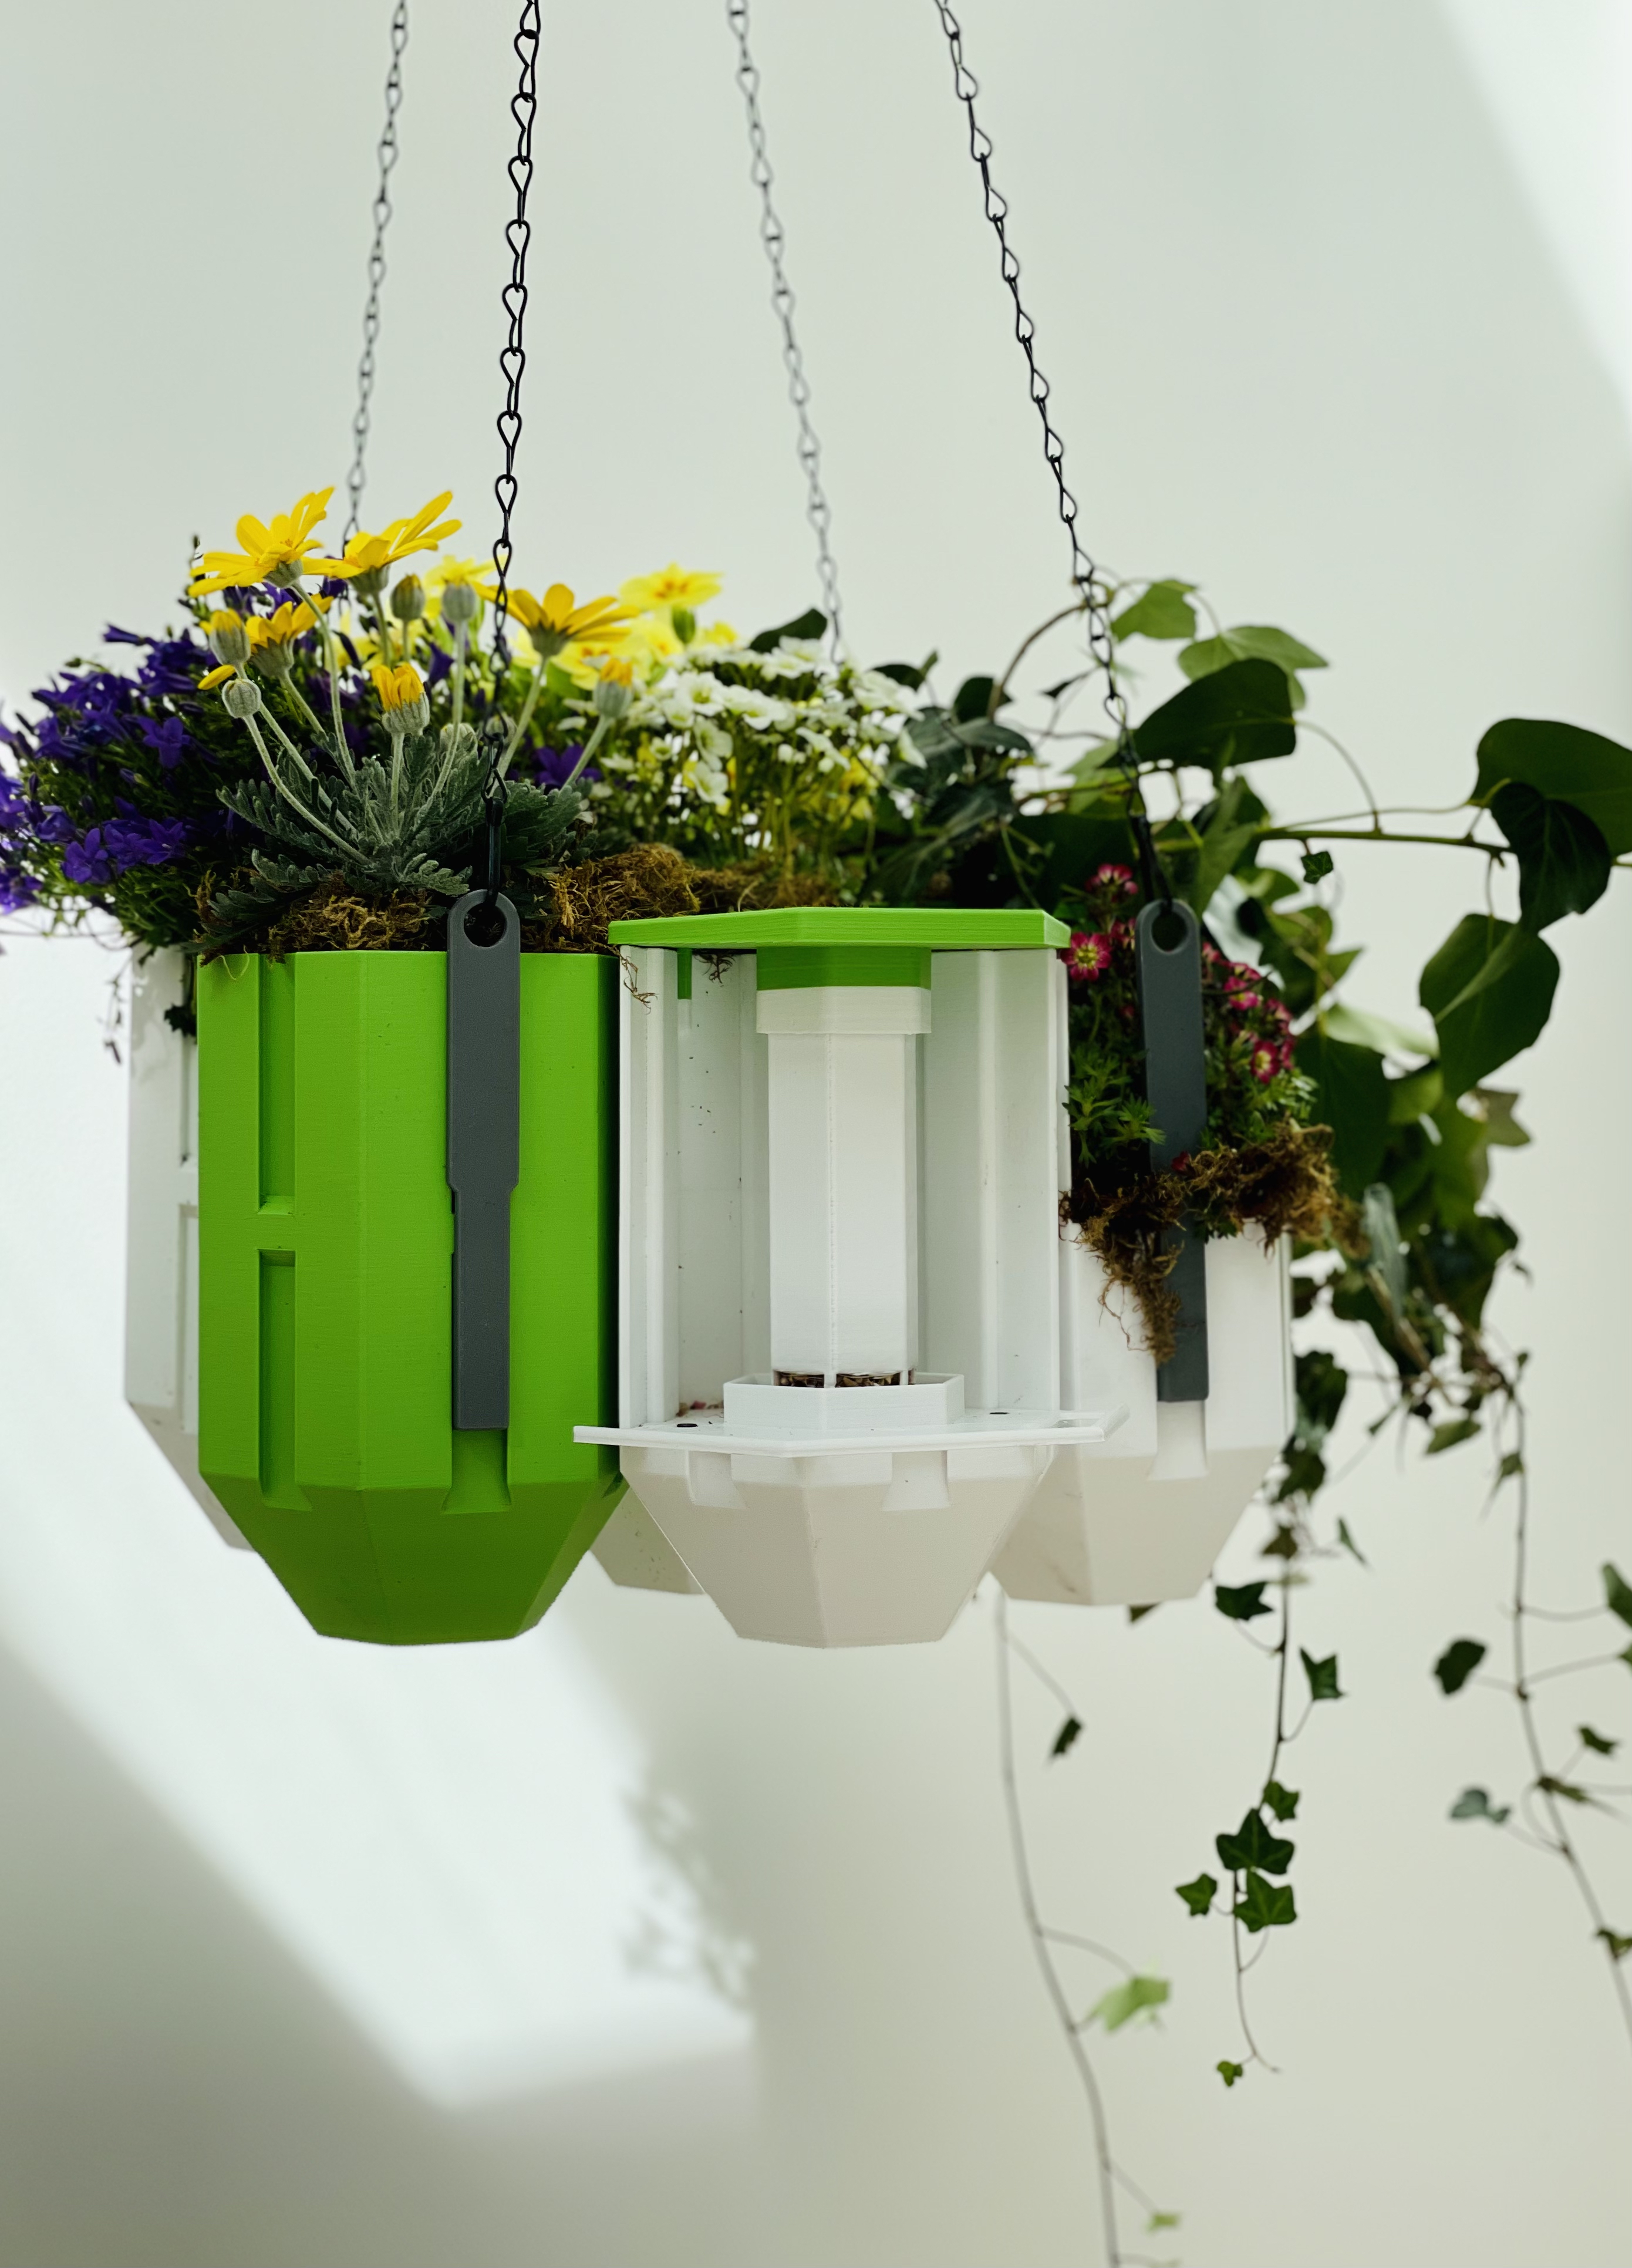 The Babylon Hanging Basket (Planter) and Bird feeder - Modular